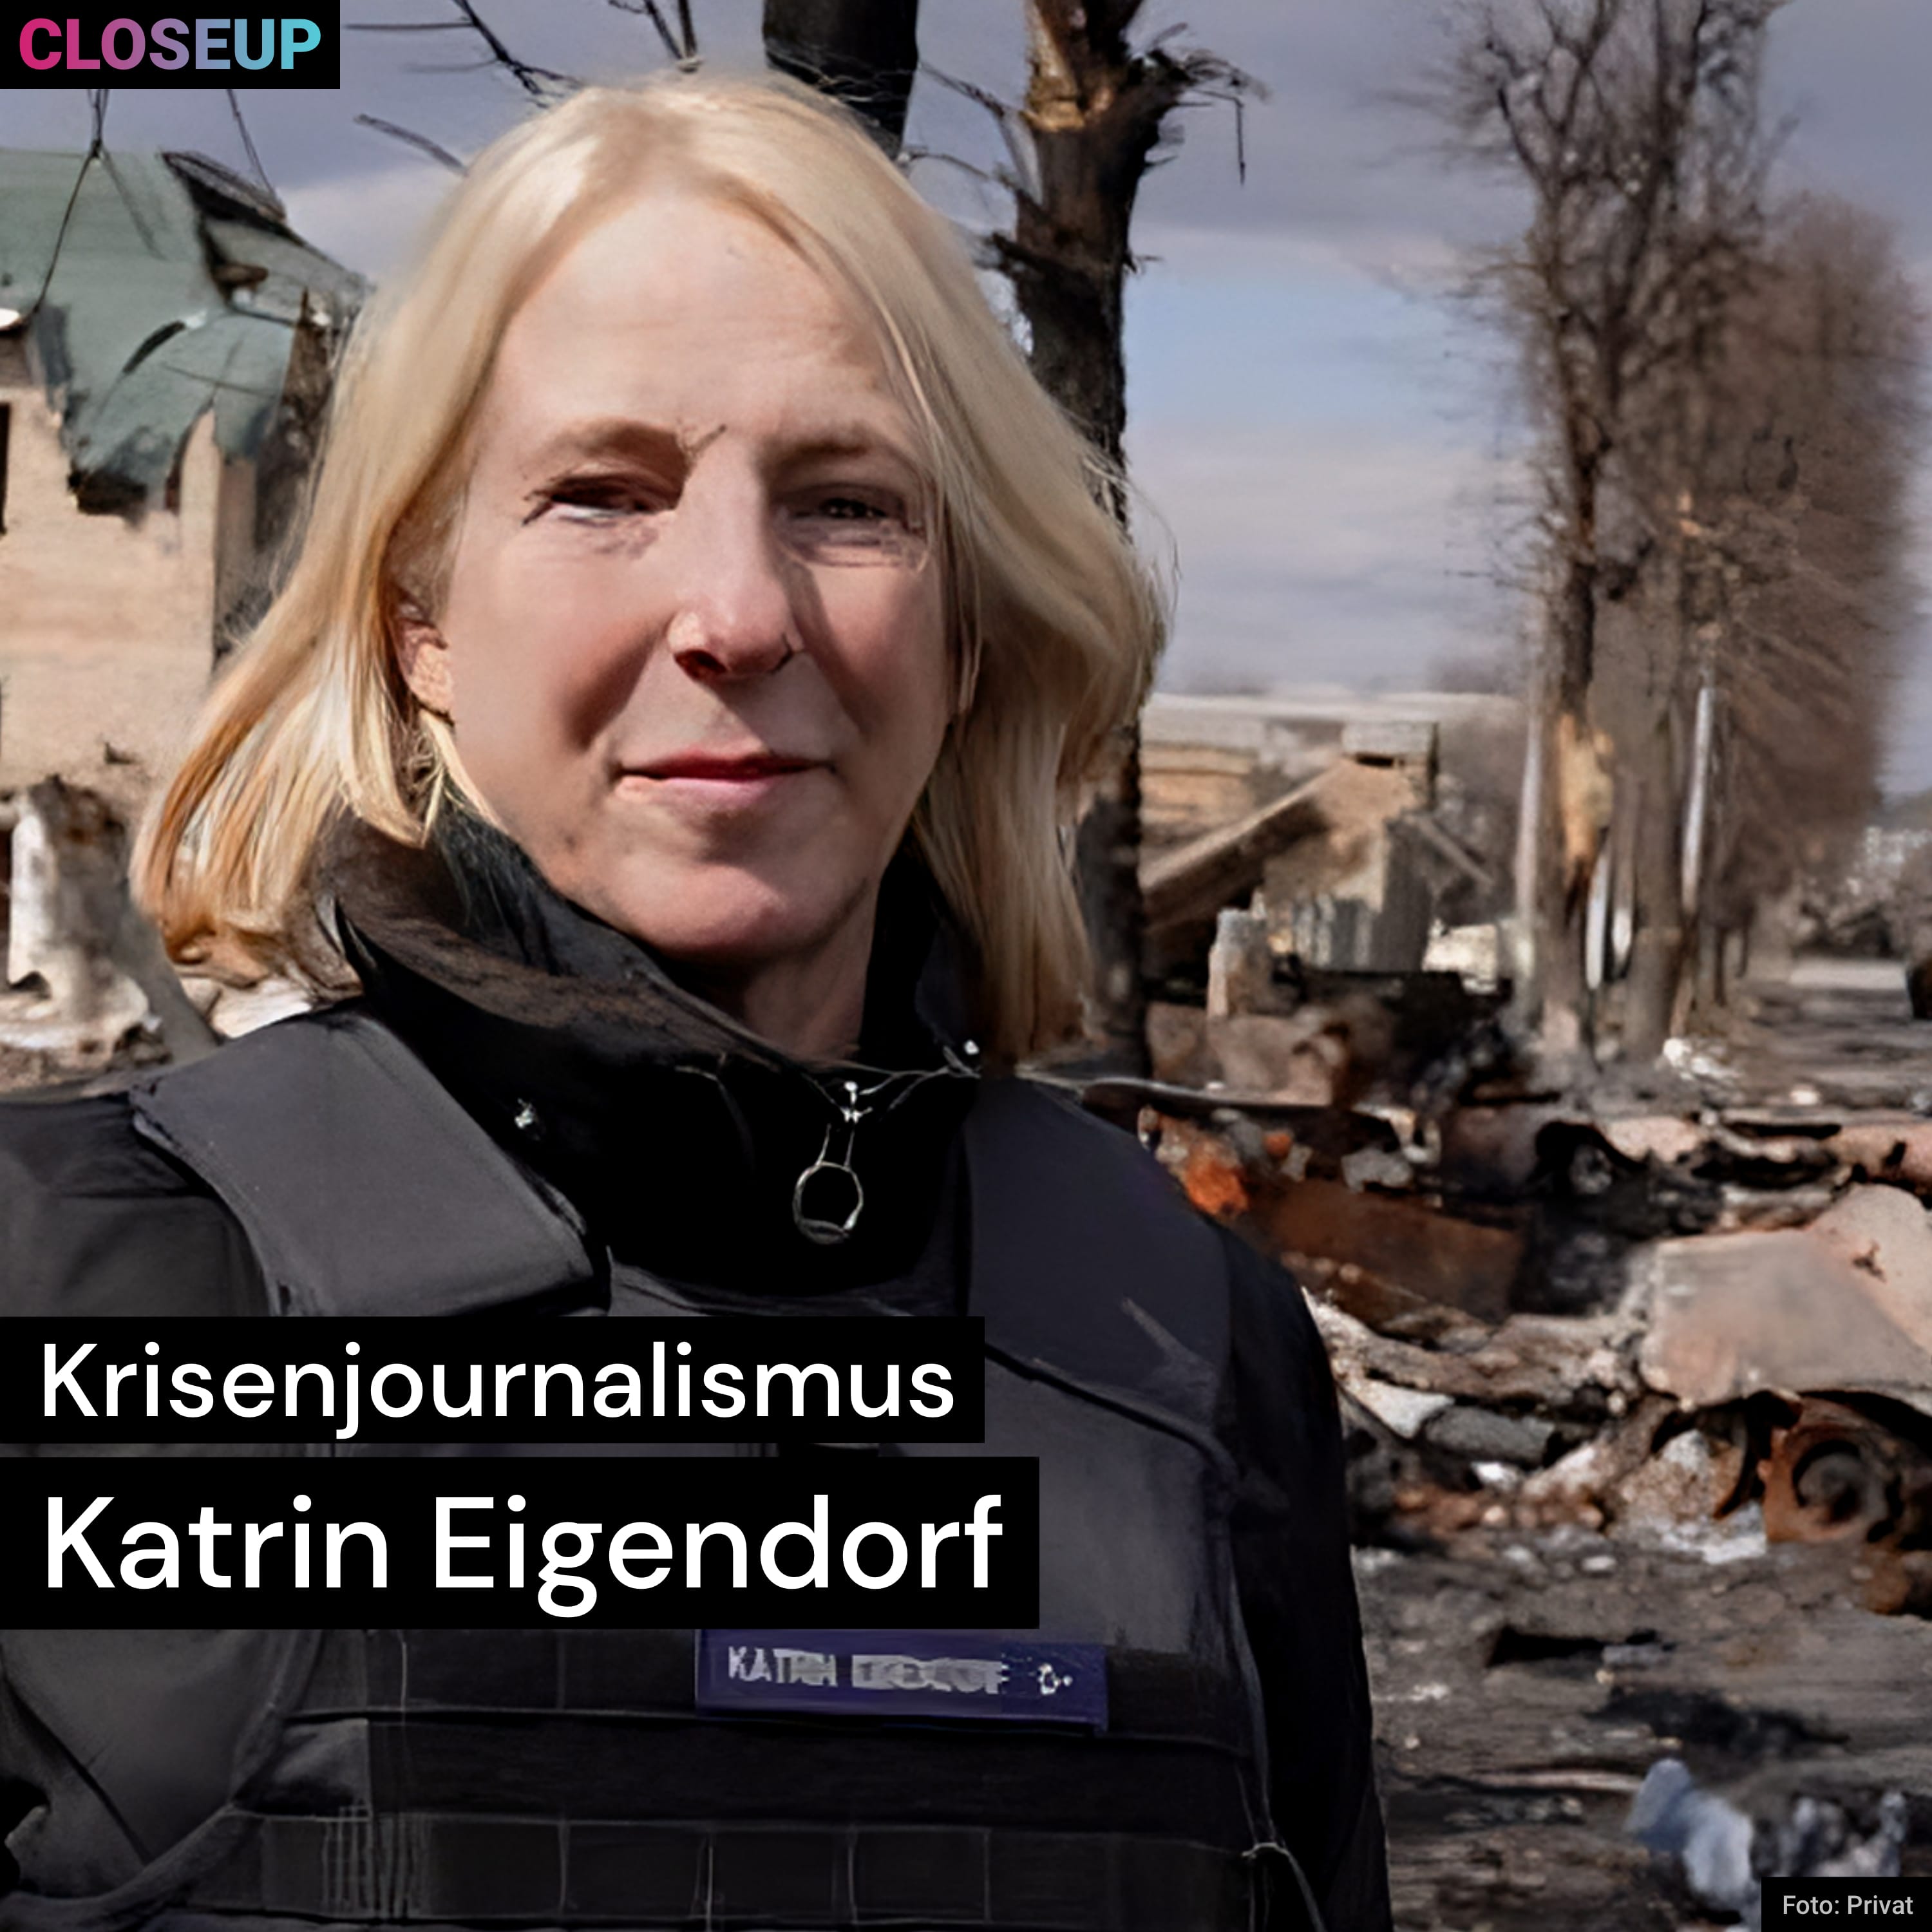 Krisenjournalismus - Katrin Eigendorf | CloseUp